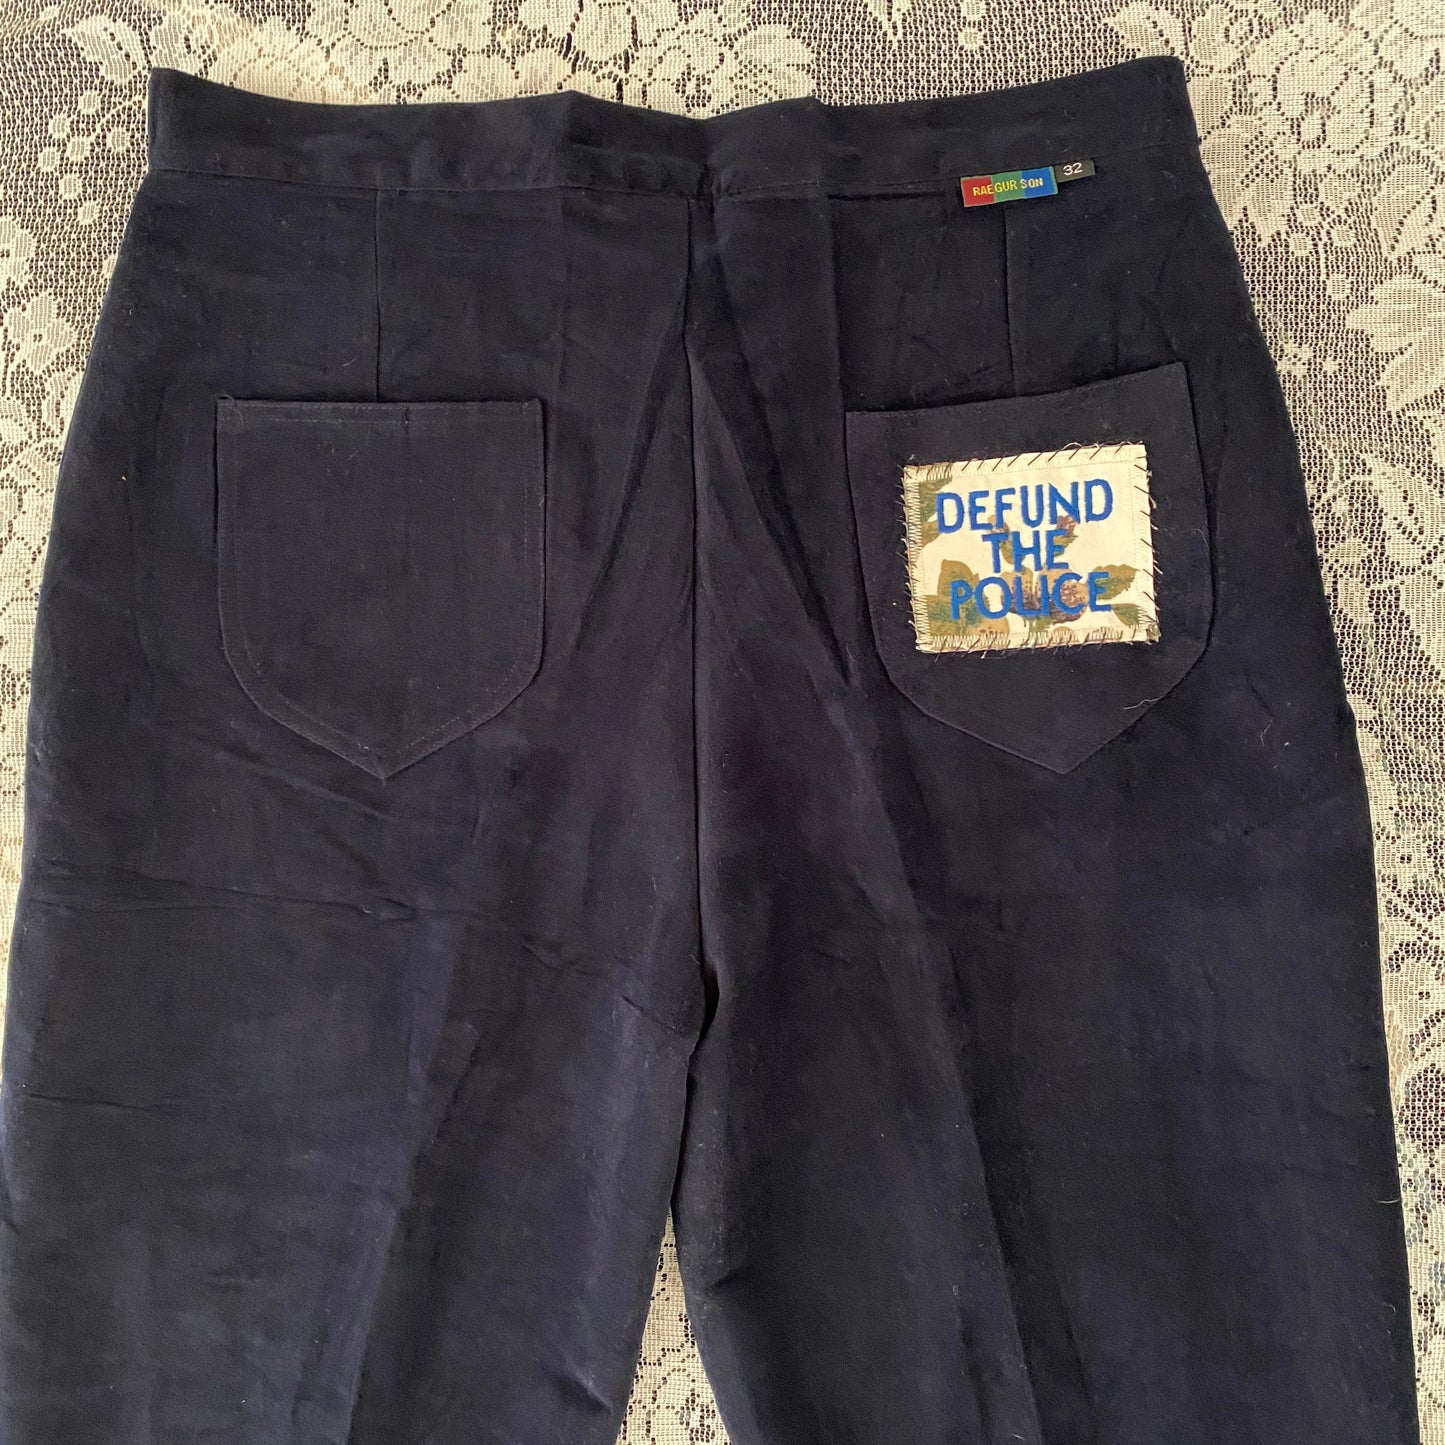 patched stirrup pants